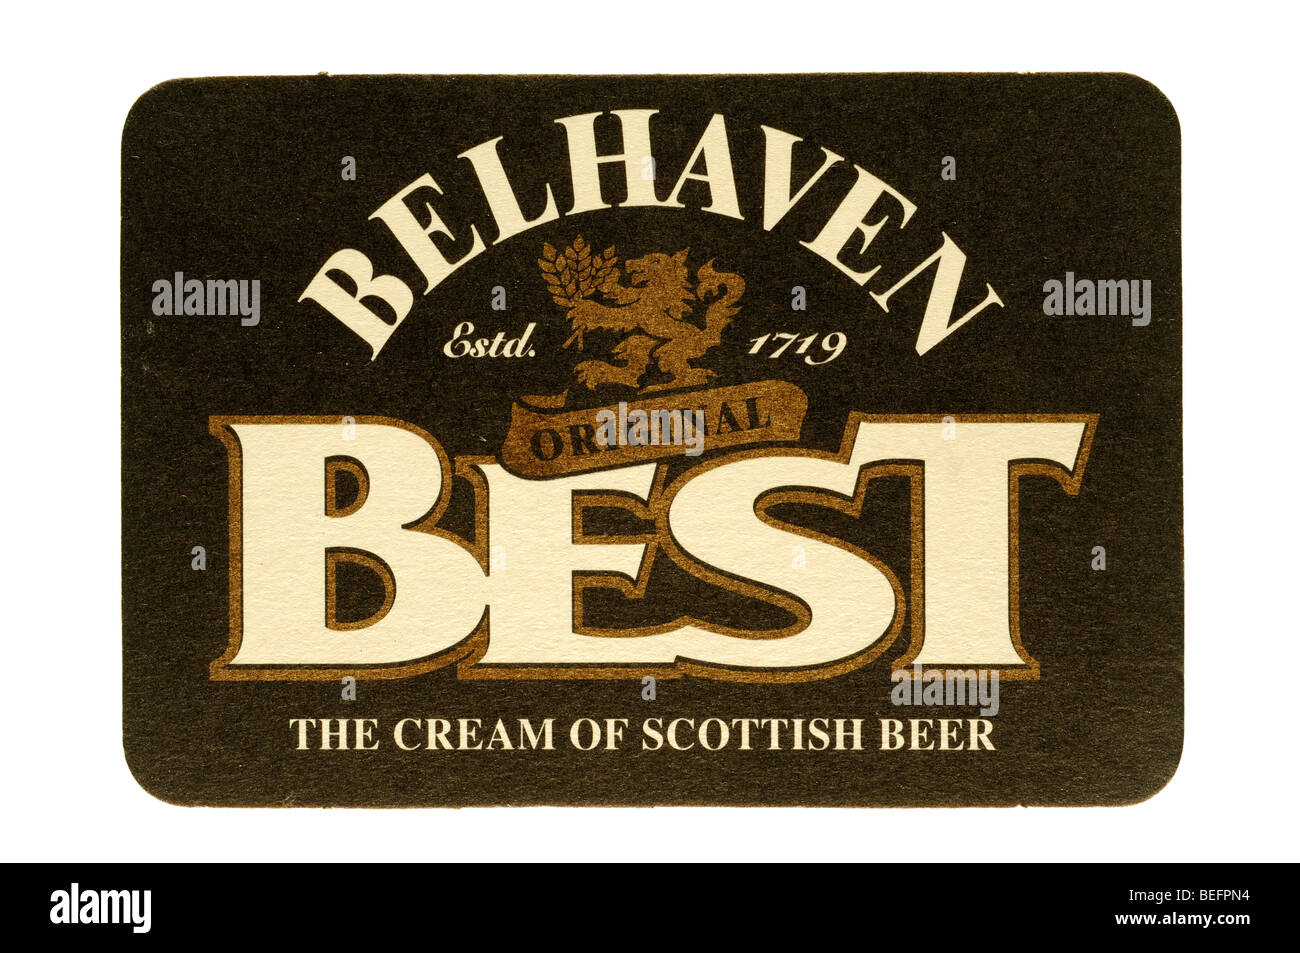 belhaven estd 1719 original best the cream of scottish beer Stock Photo